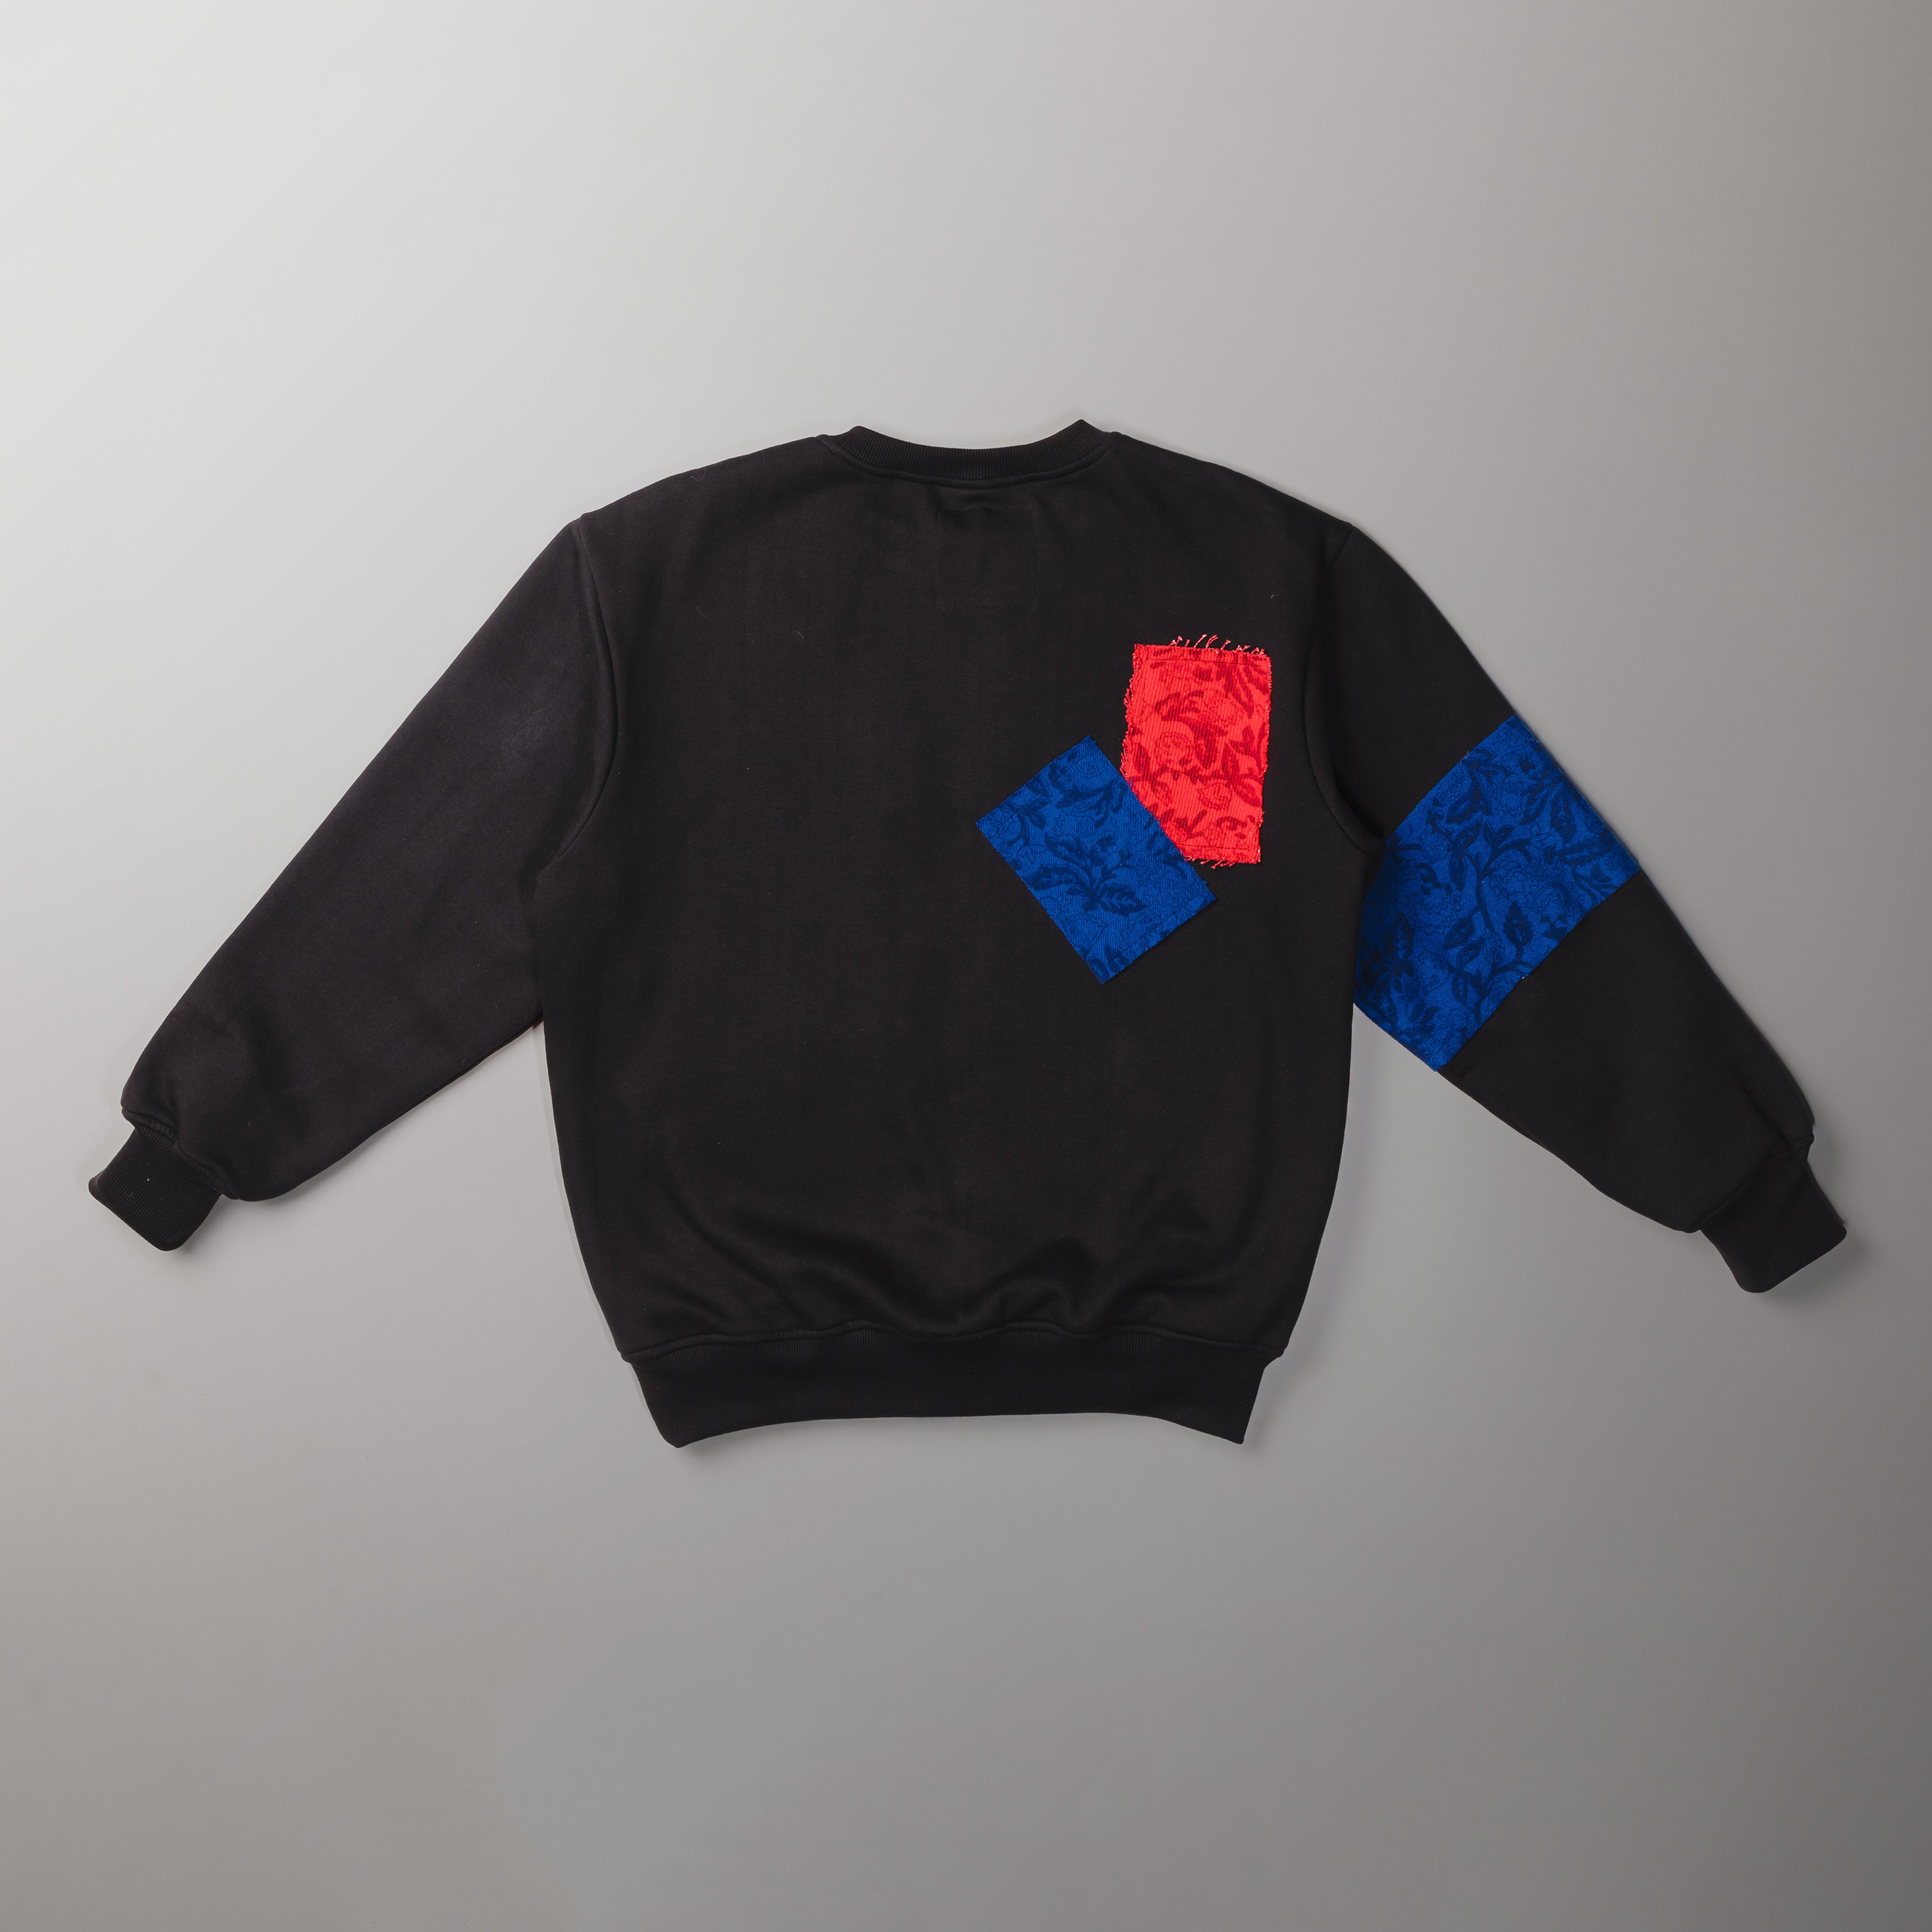 Patchy-Handwoven - Sweatshirt